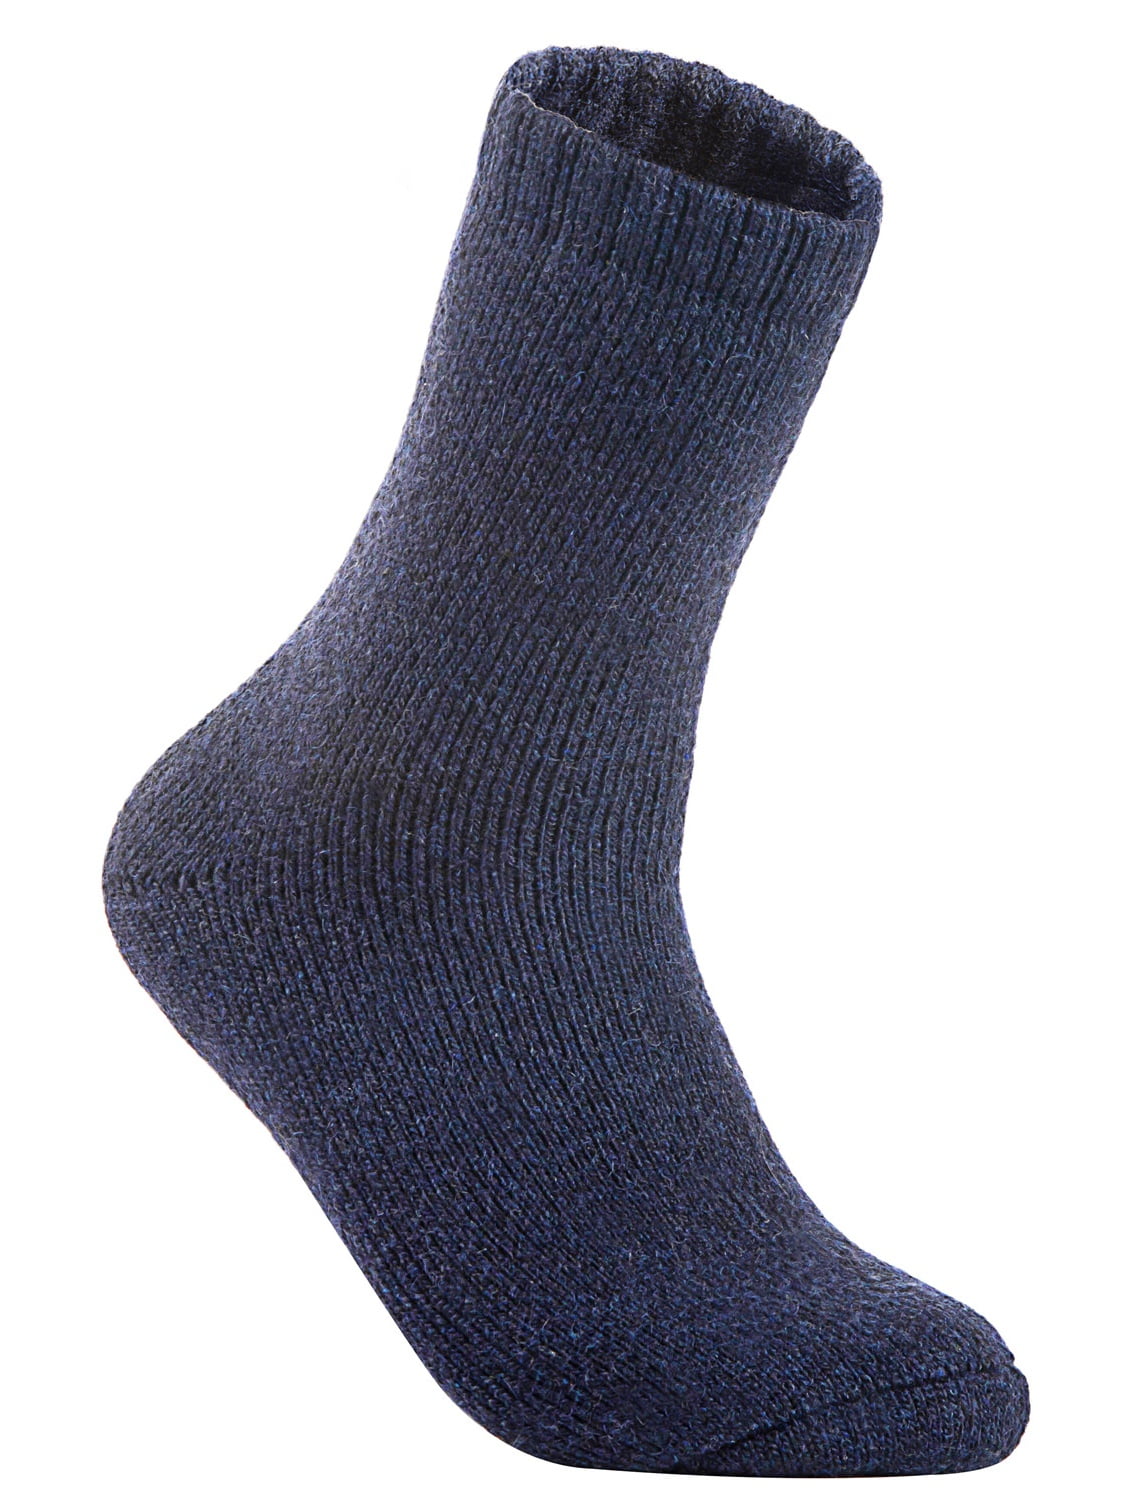 WigWam Ingenious Boot Sock Getting Fit 61283 Girls Socks